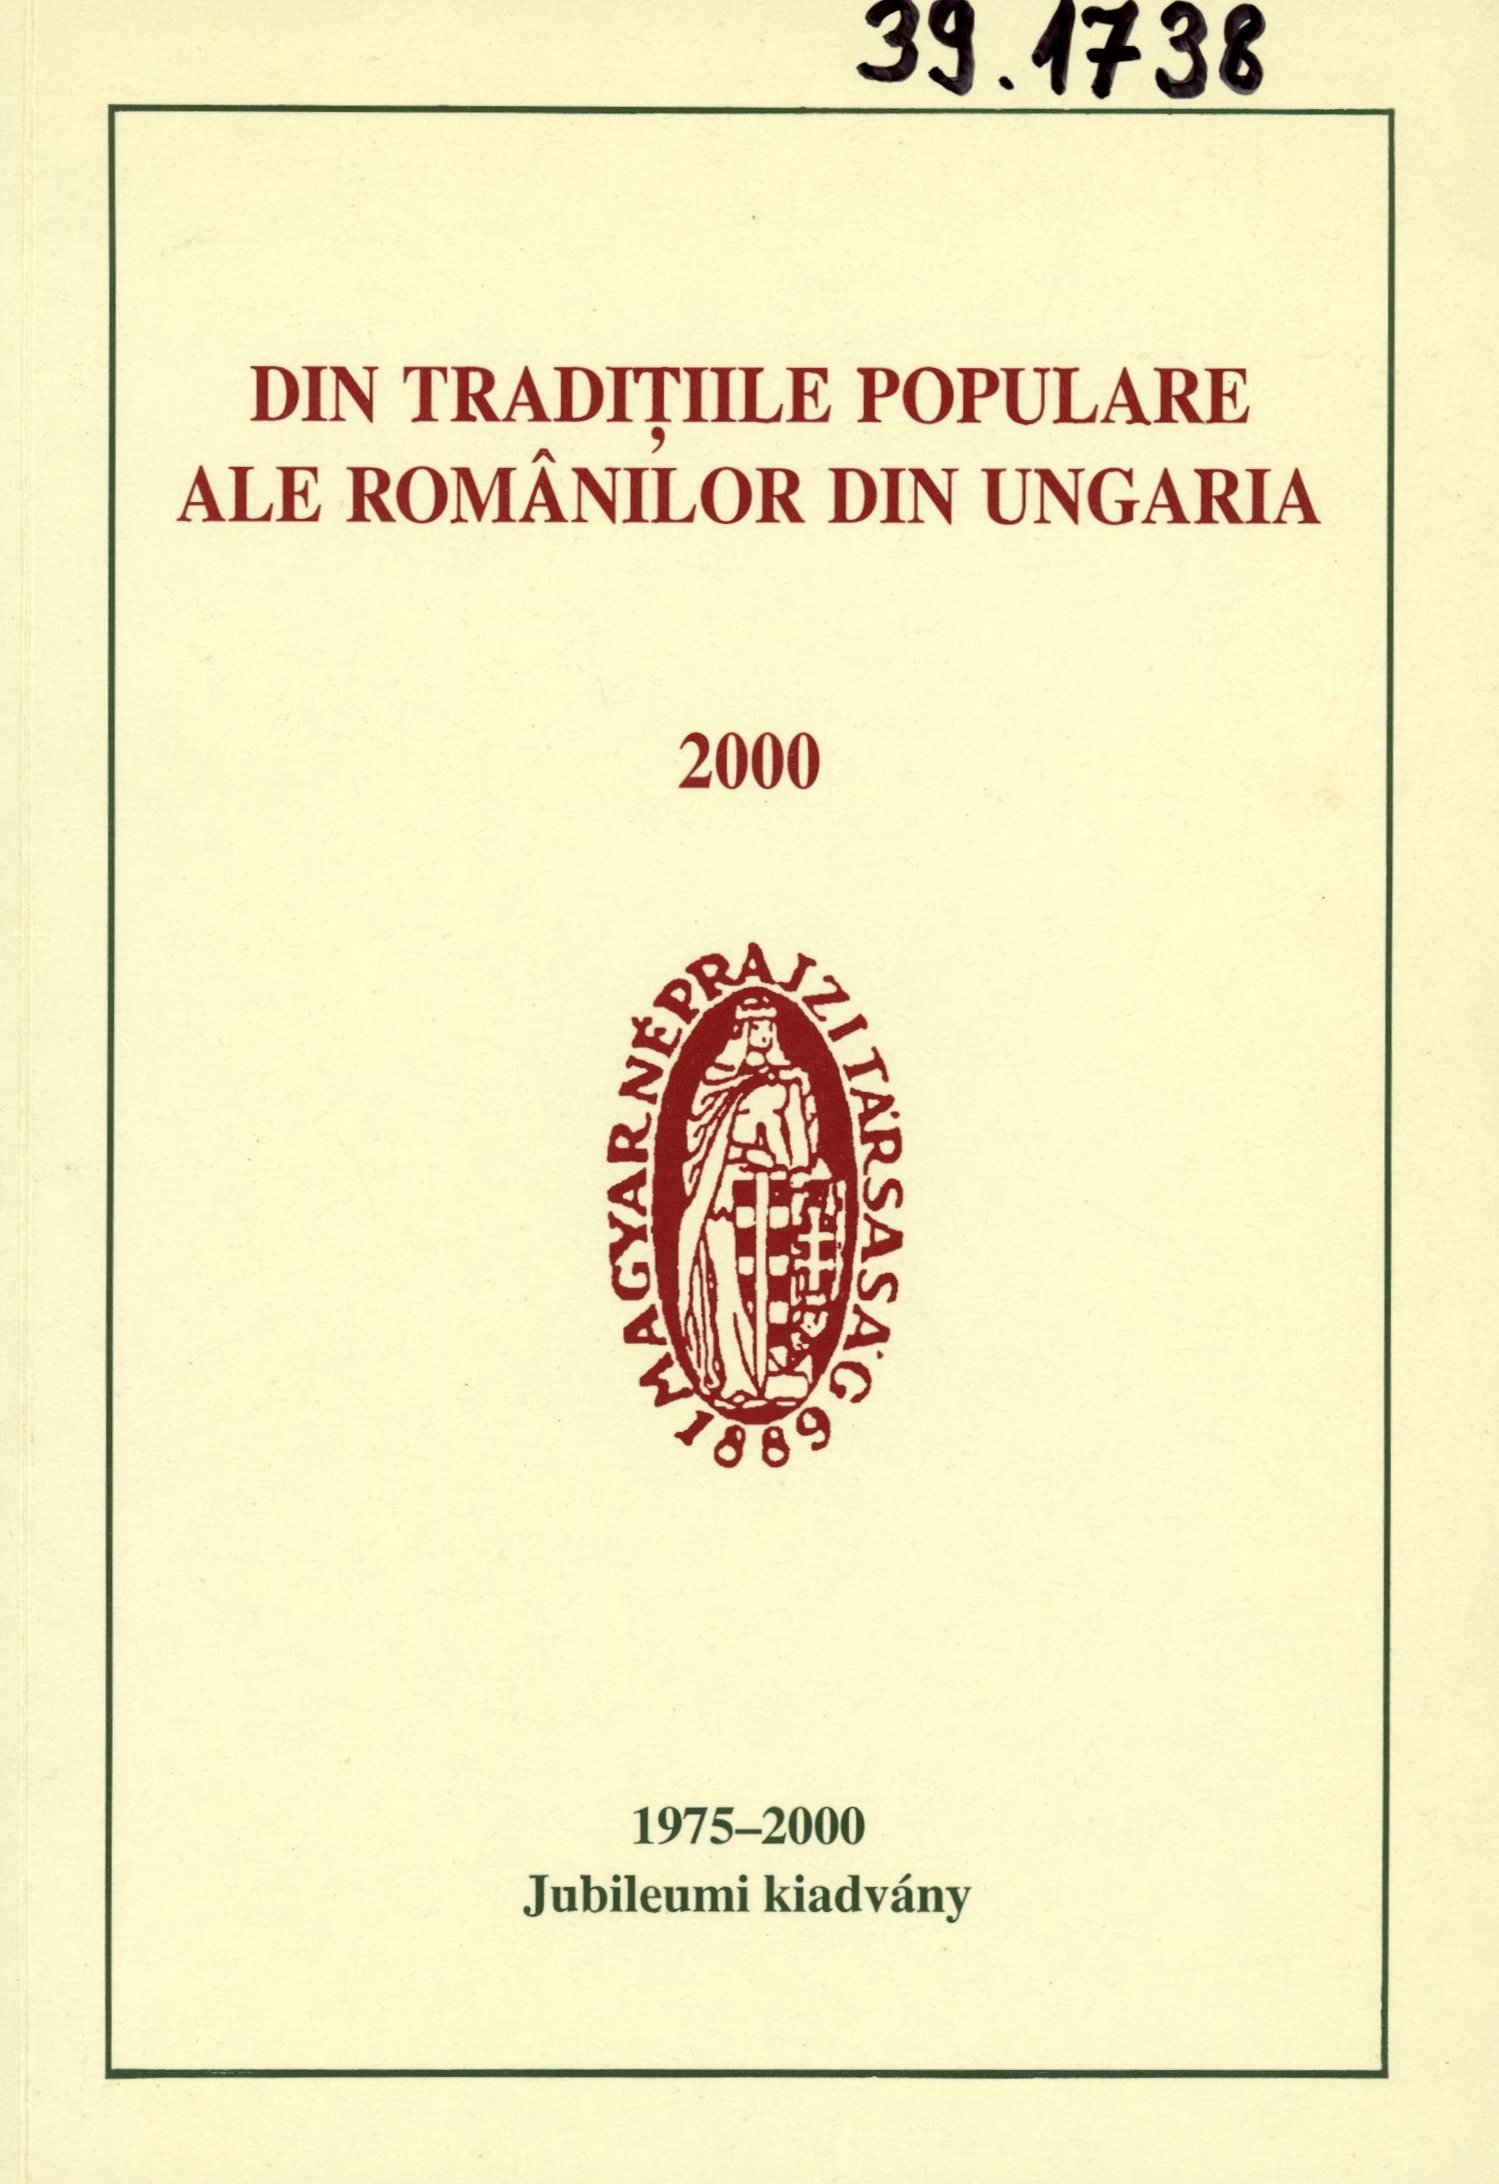 Din Traditiile Populare Ale Románilor Din Ungaria 2000 (Erkel Ferenc Múzeum és Könyvtár, Gyula CC BY-NC-SA)